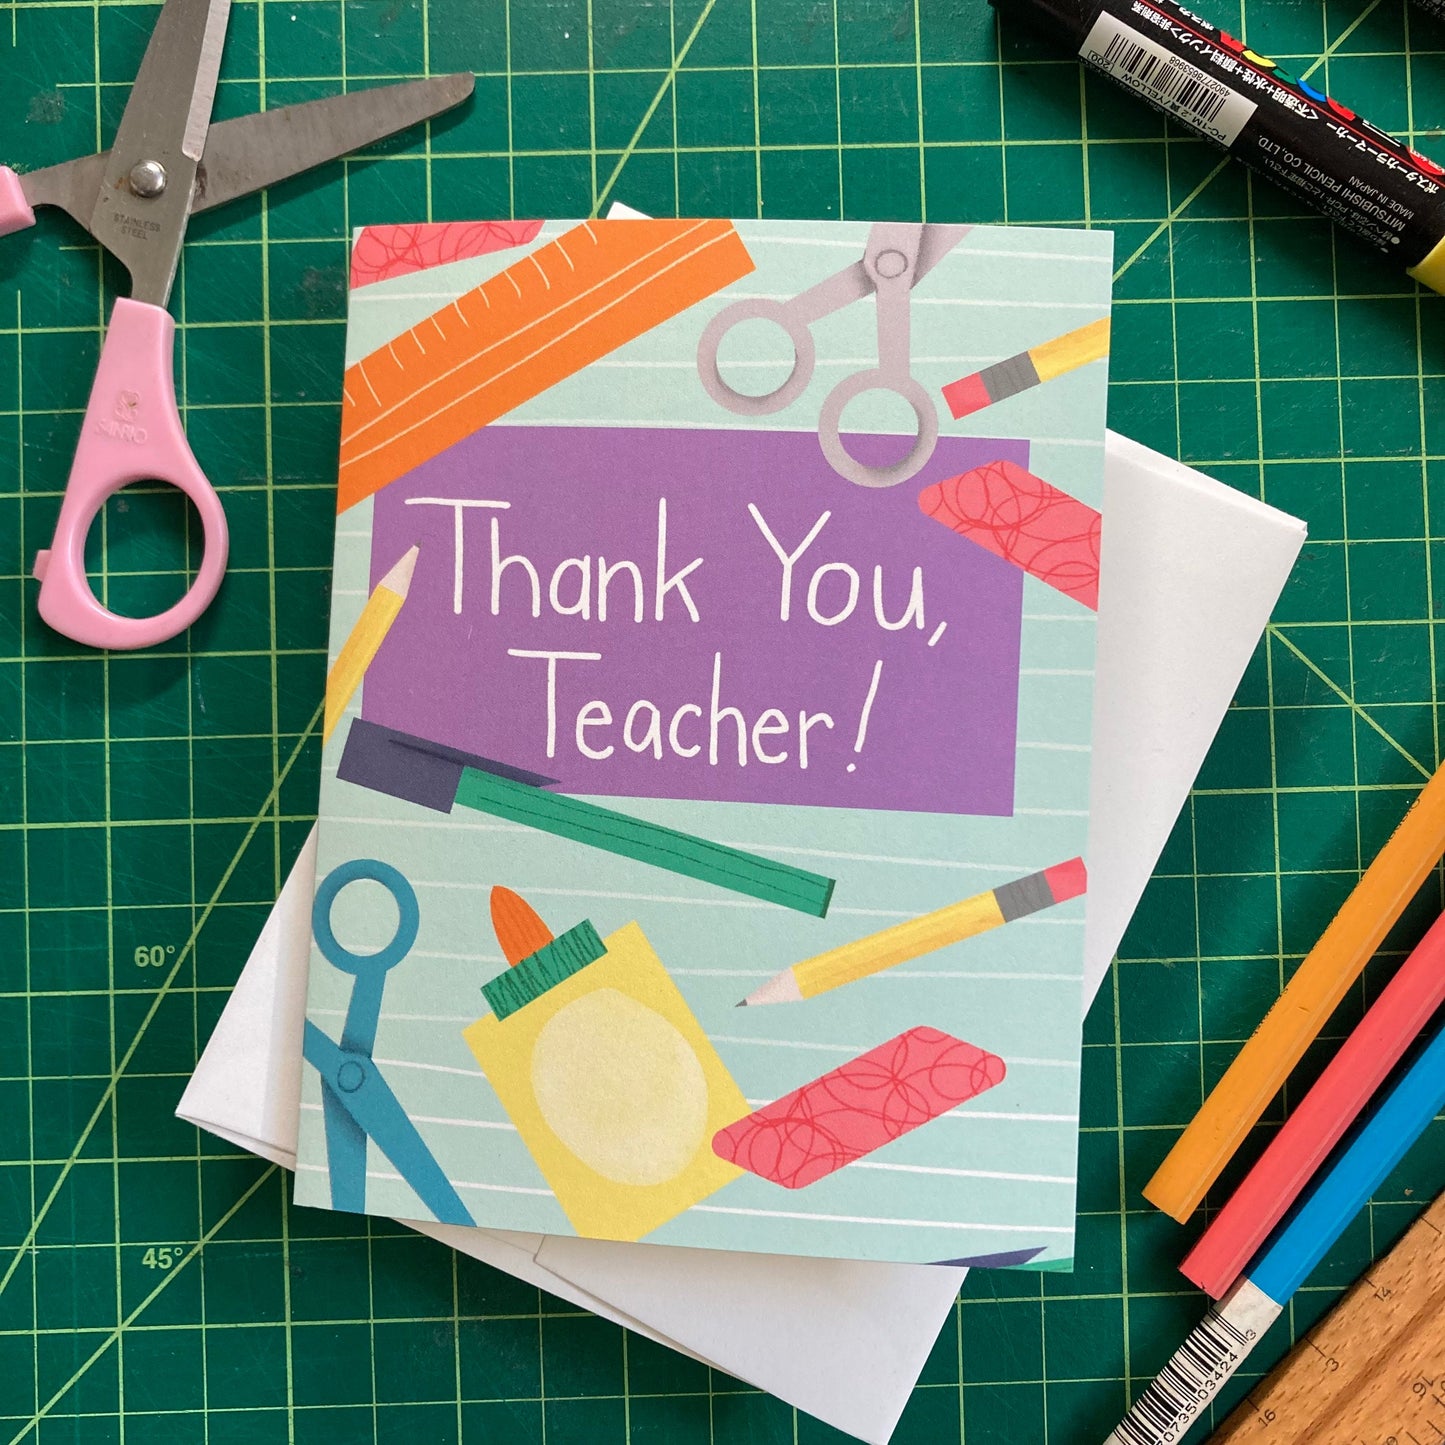 THANKS - Thanks Teacher School Supplies - Appreciation, educator, professor, special education, art by Adriana Bergstrom (Adriprints)